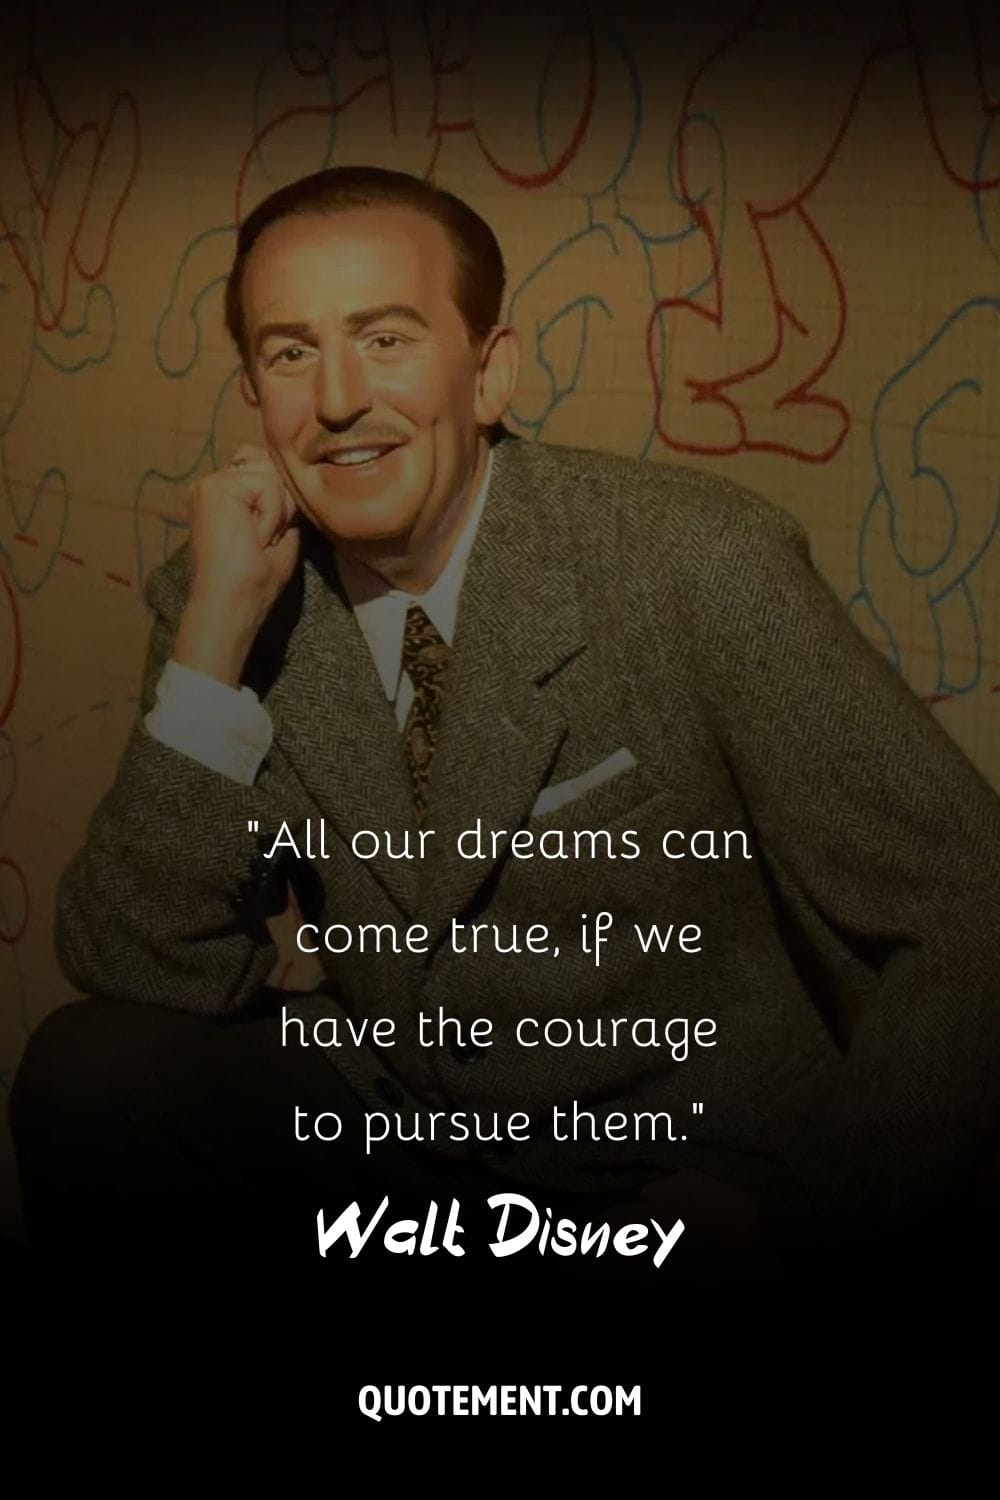 Walt Disney posing for the camera representing Walt Disney motivational quote.